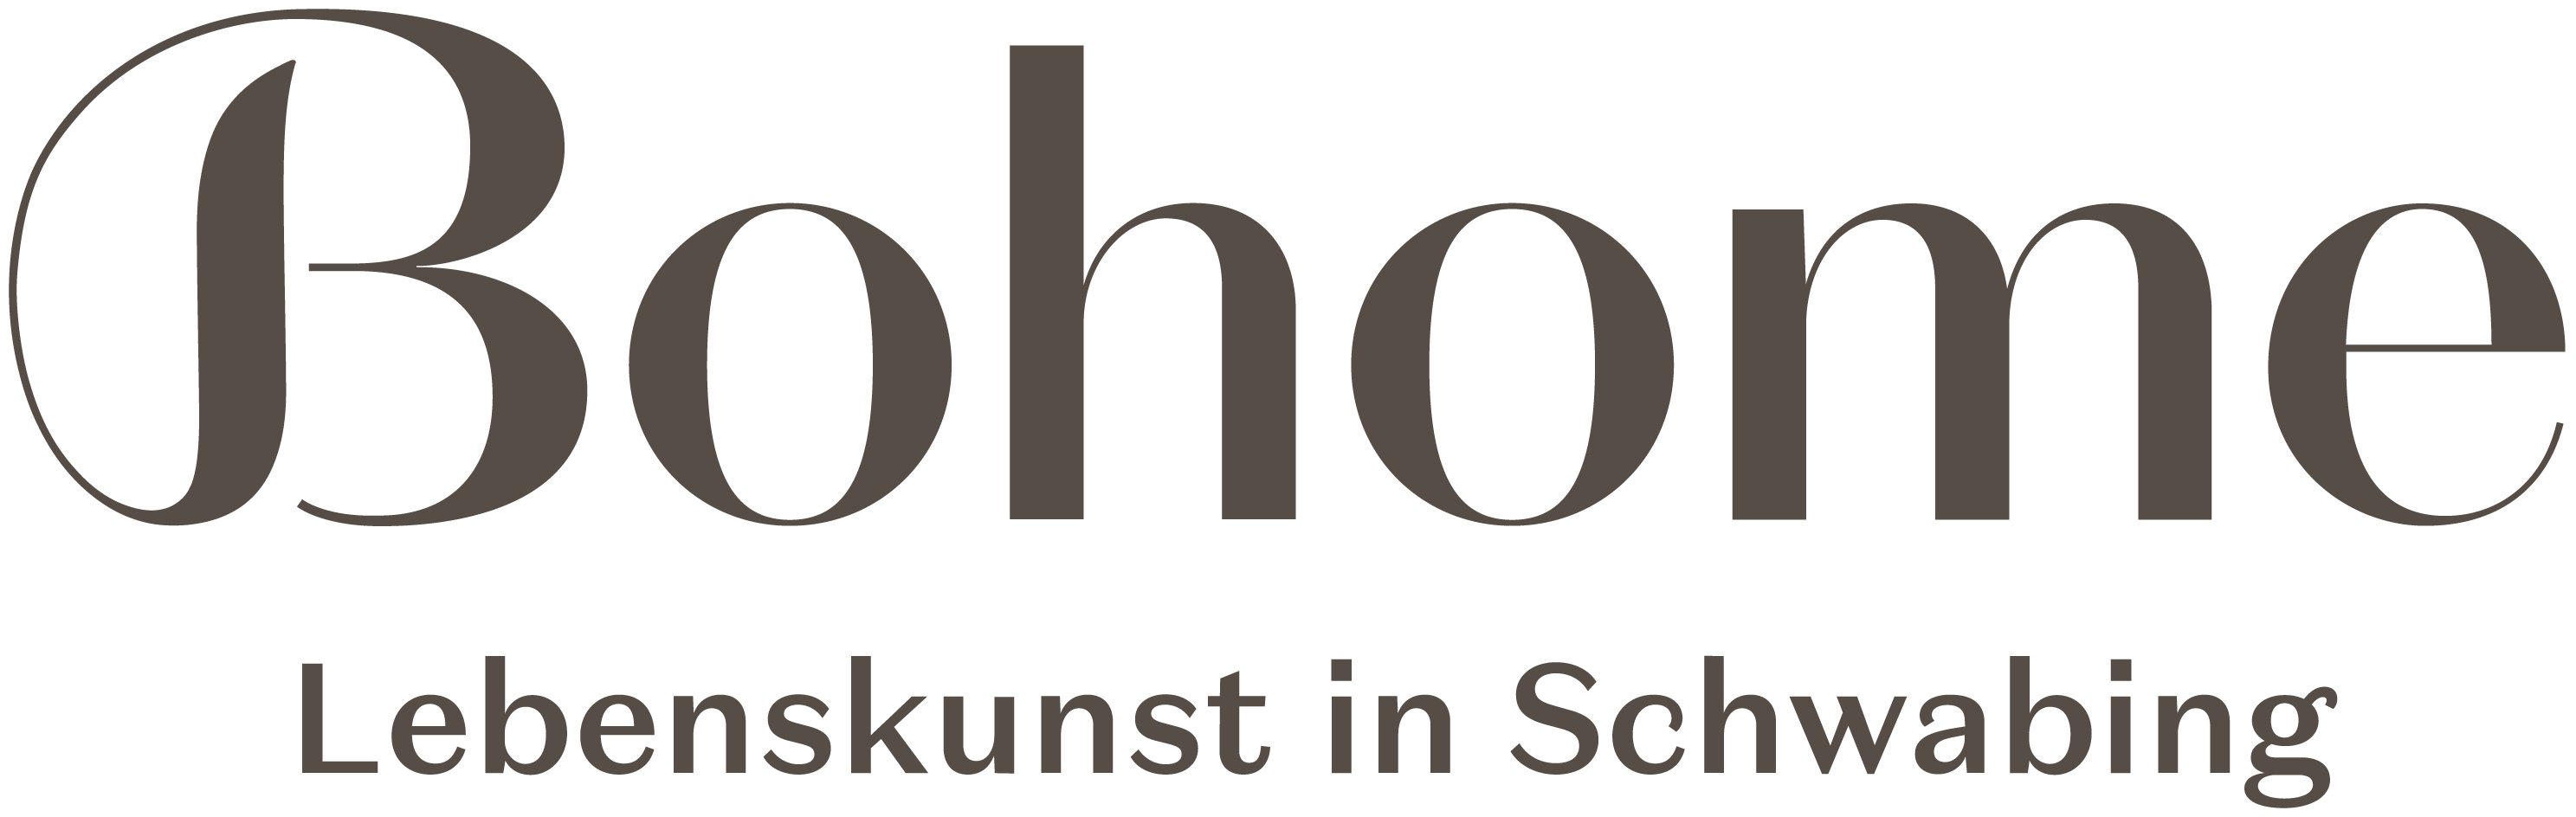 Logo Neubauprojekt Bohome - Lebenskunst in Schwabing, München